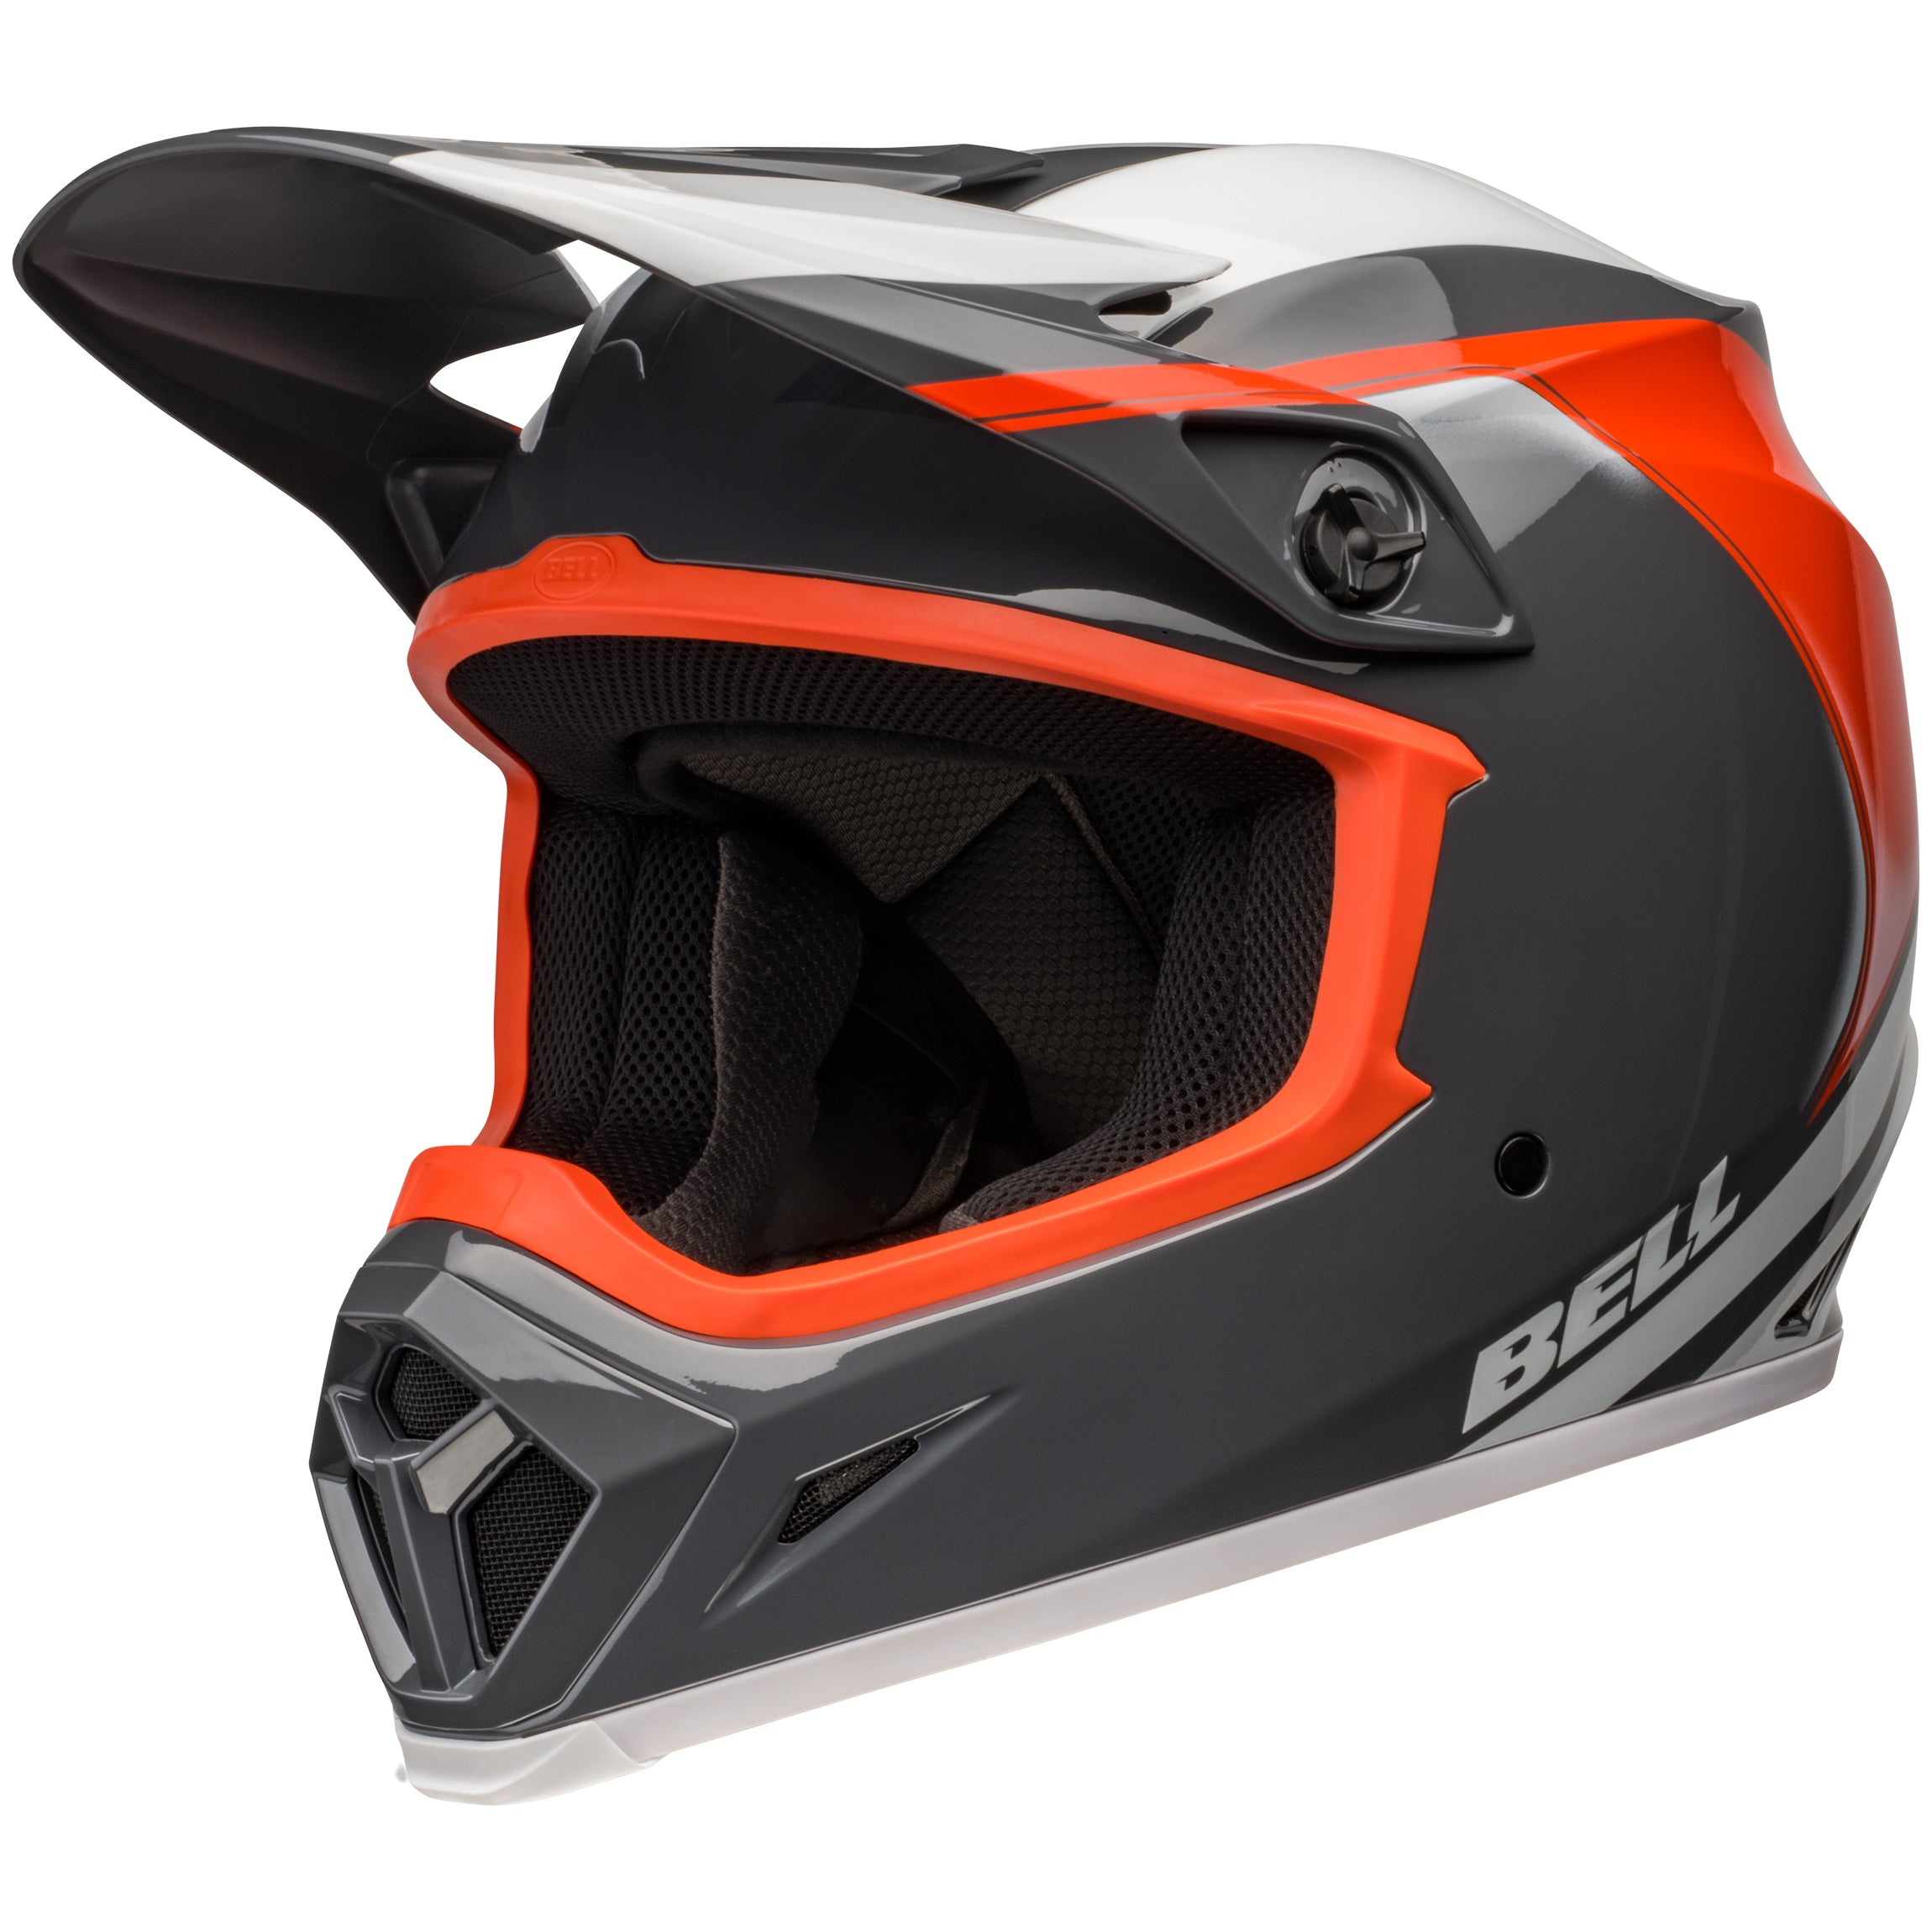 Bell MX 2024 MX-9 Mips Adult Helmet in Dart Charcoal and Orange design, featuring ECE6 certification.